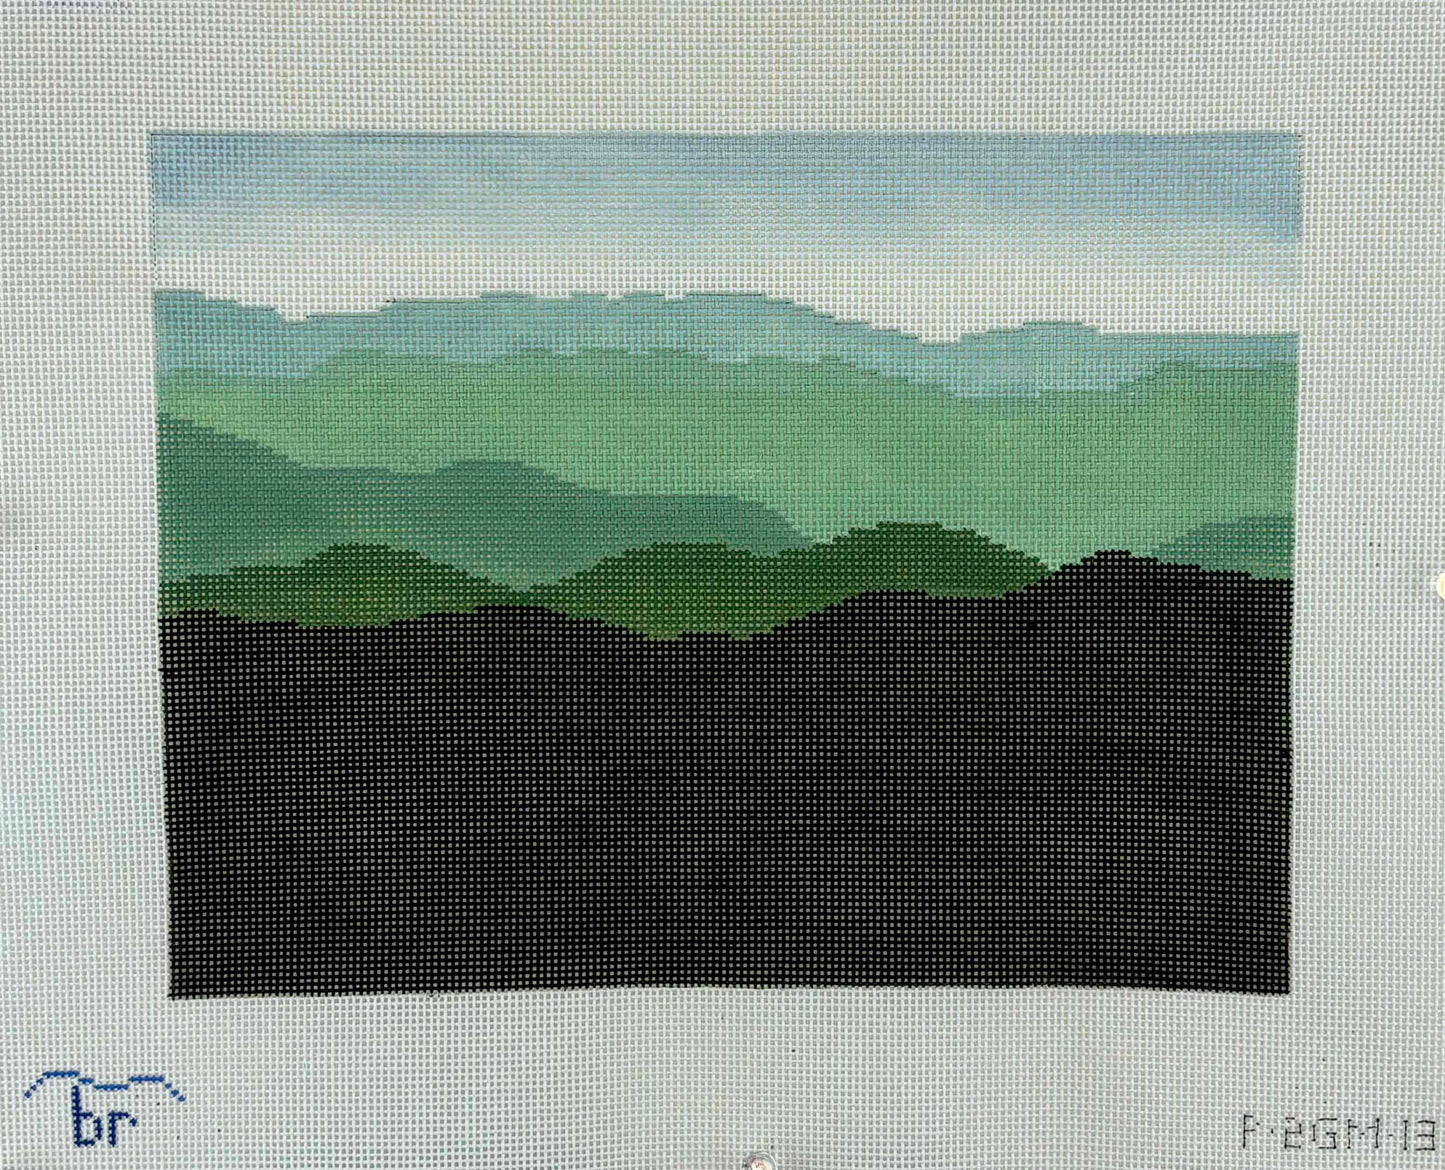 Green Mountains - large on 13 mesh